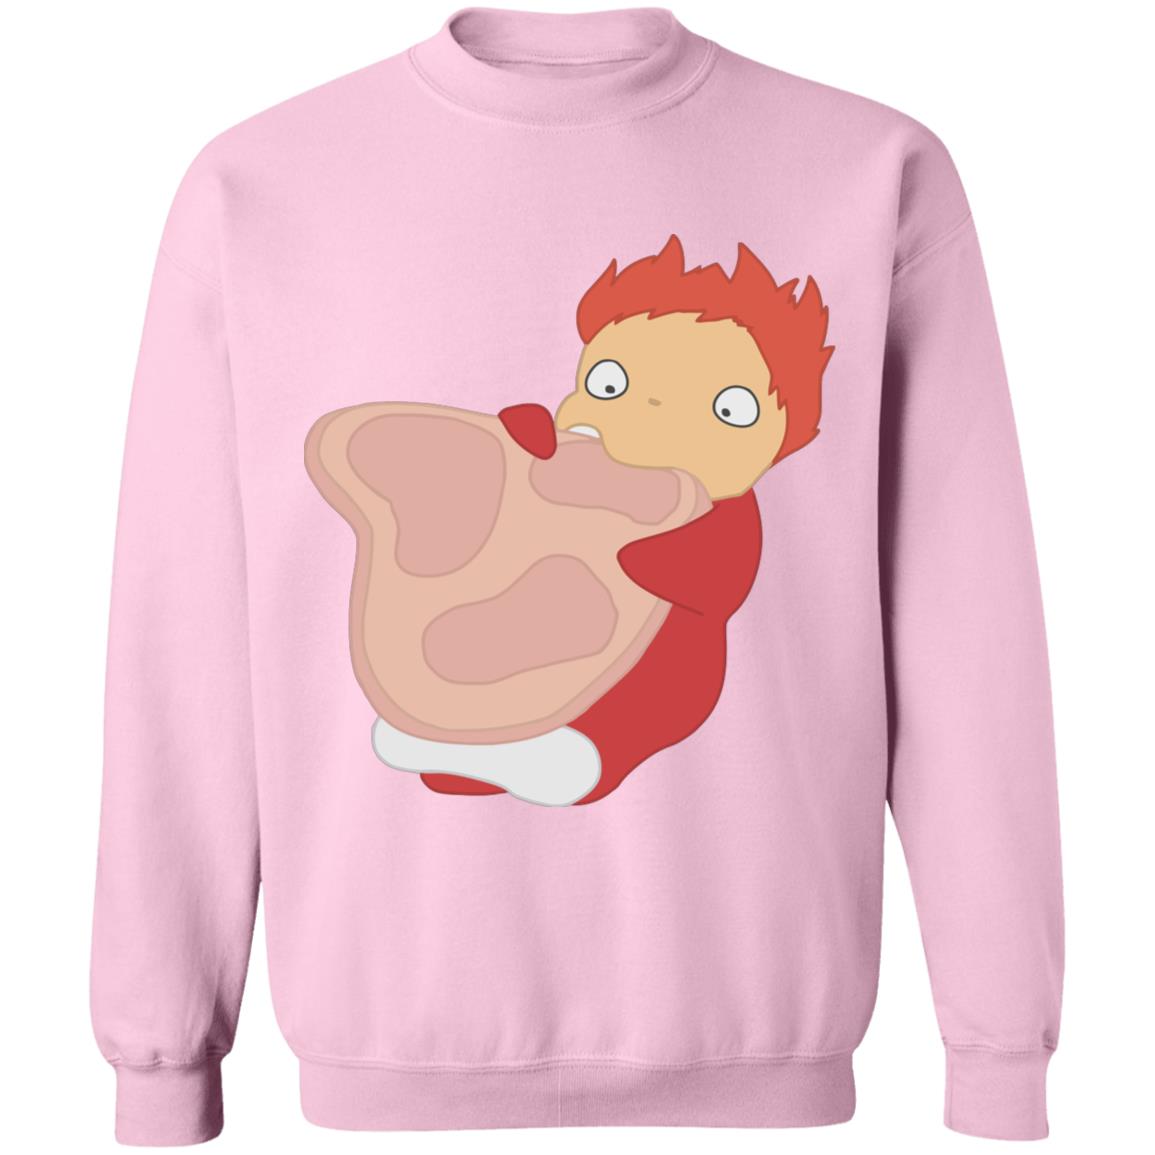 The Hungry Ponyo Sweatshirt